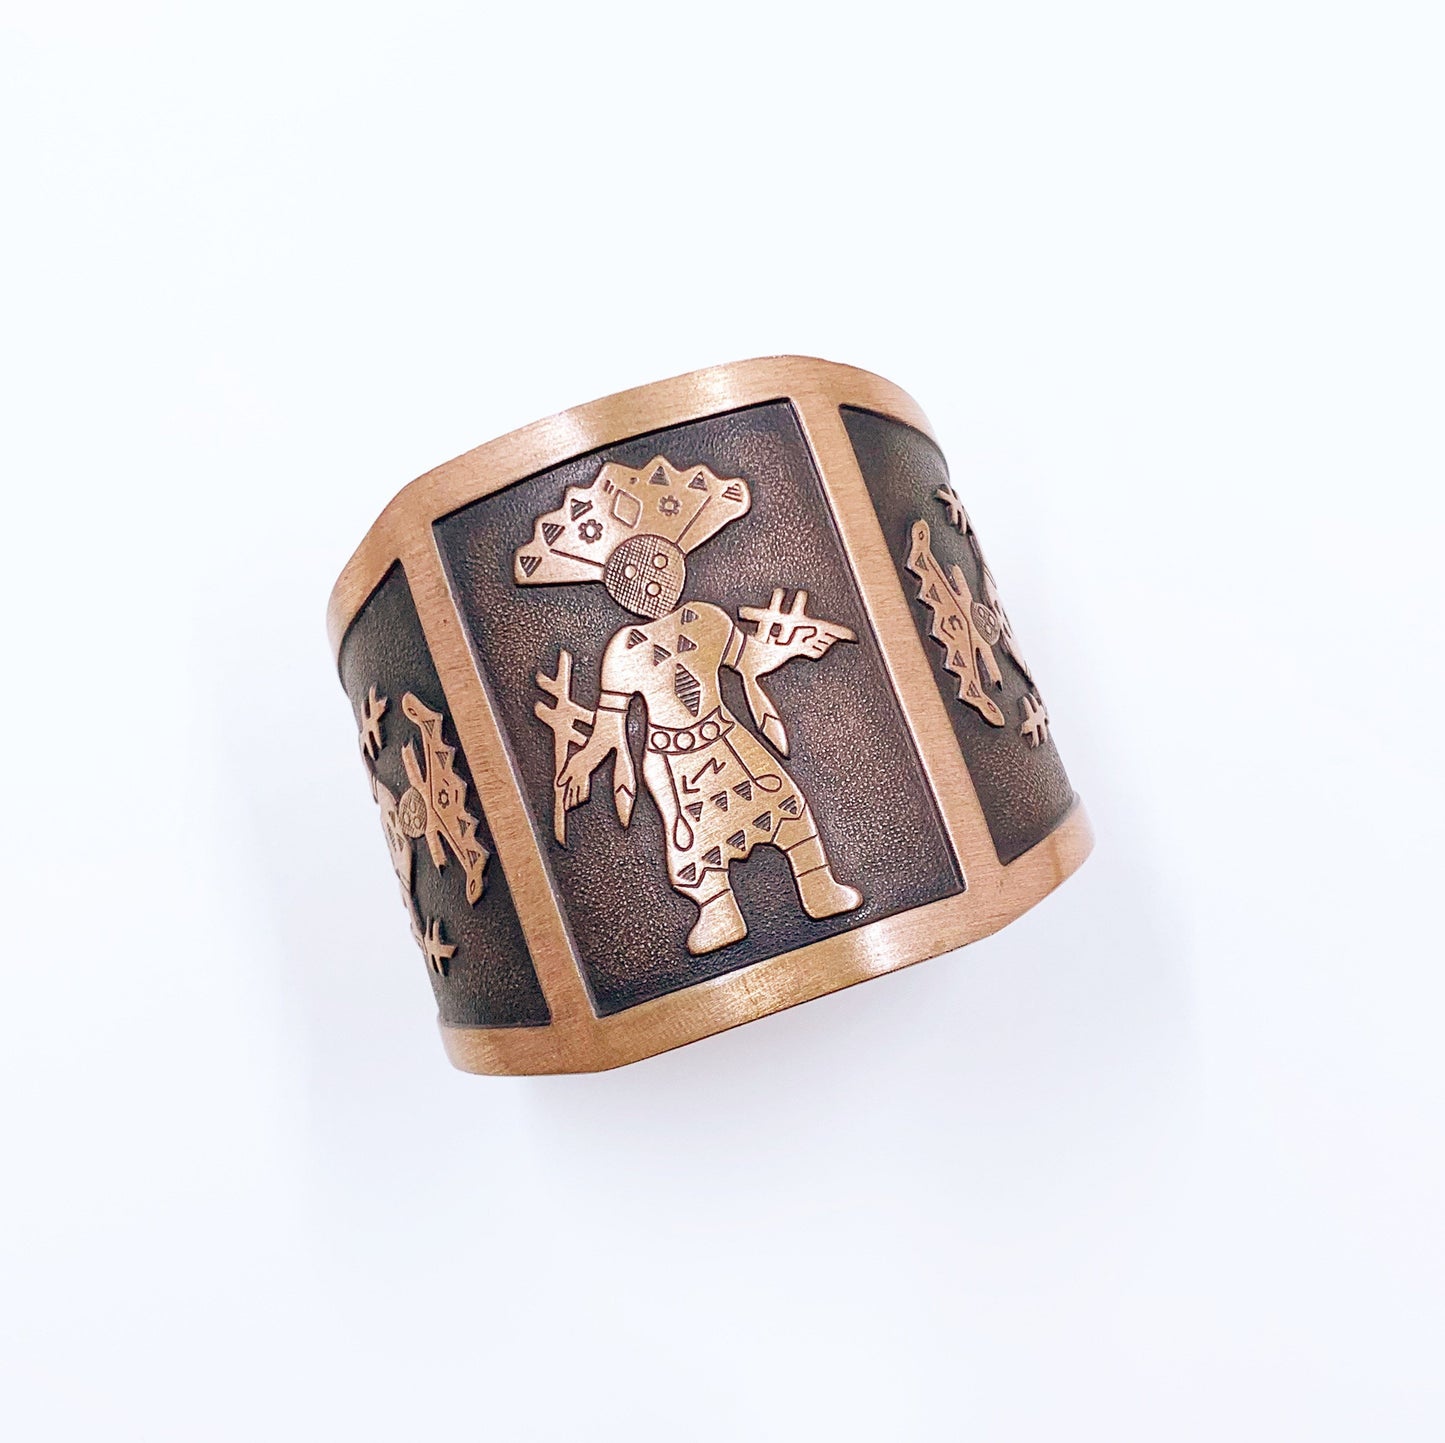 Vintage Copper Kachina Dancer Wide Cuff | WM Wheeler Co Cuff Bracelet | Southwestern Bracelet